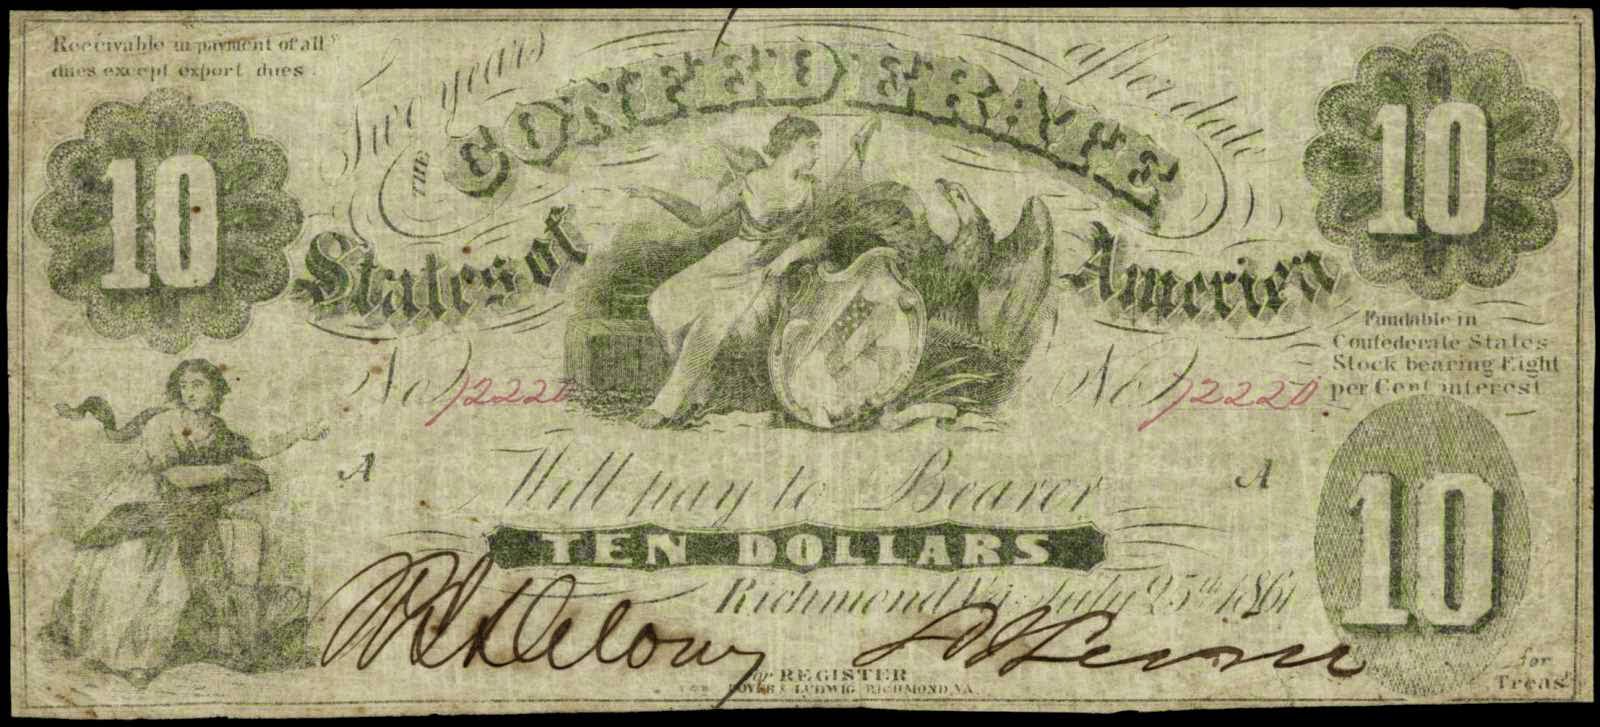 Confederate Money 1861 Ten Dollars Note